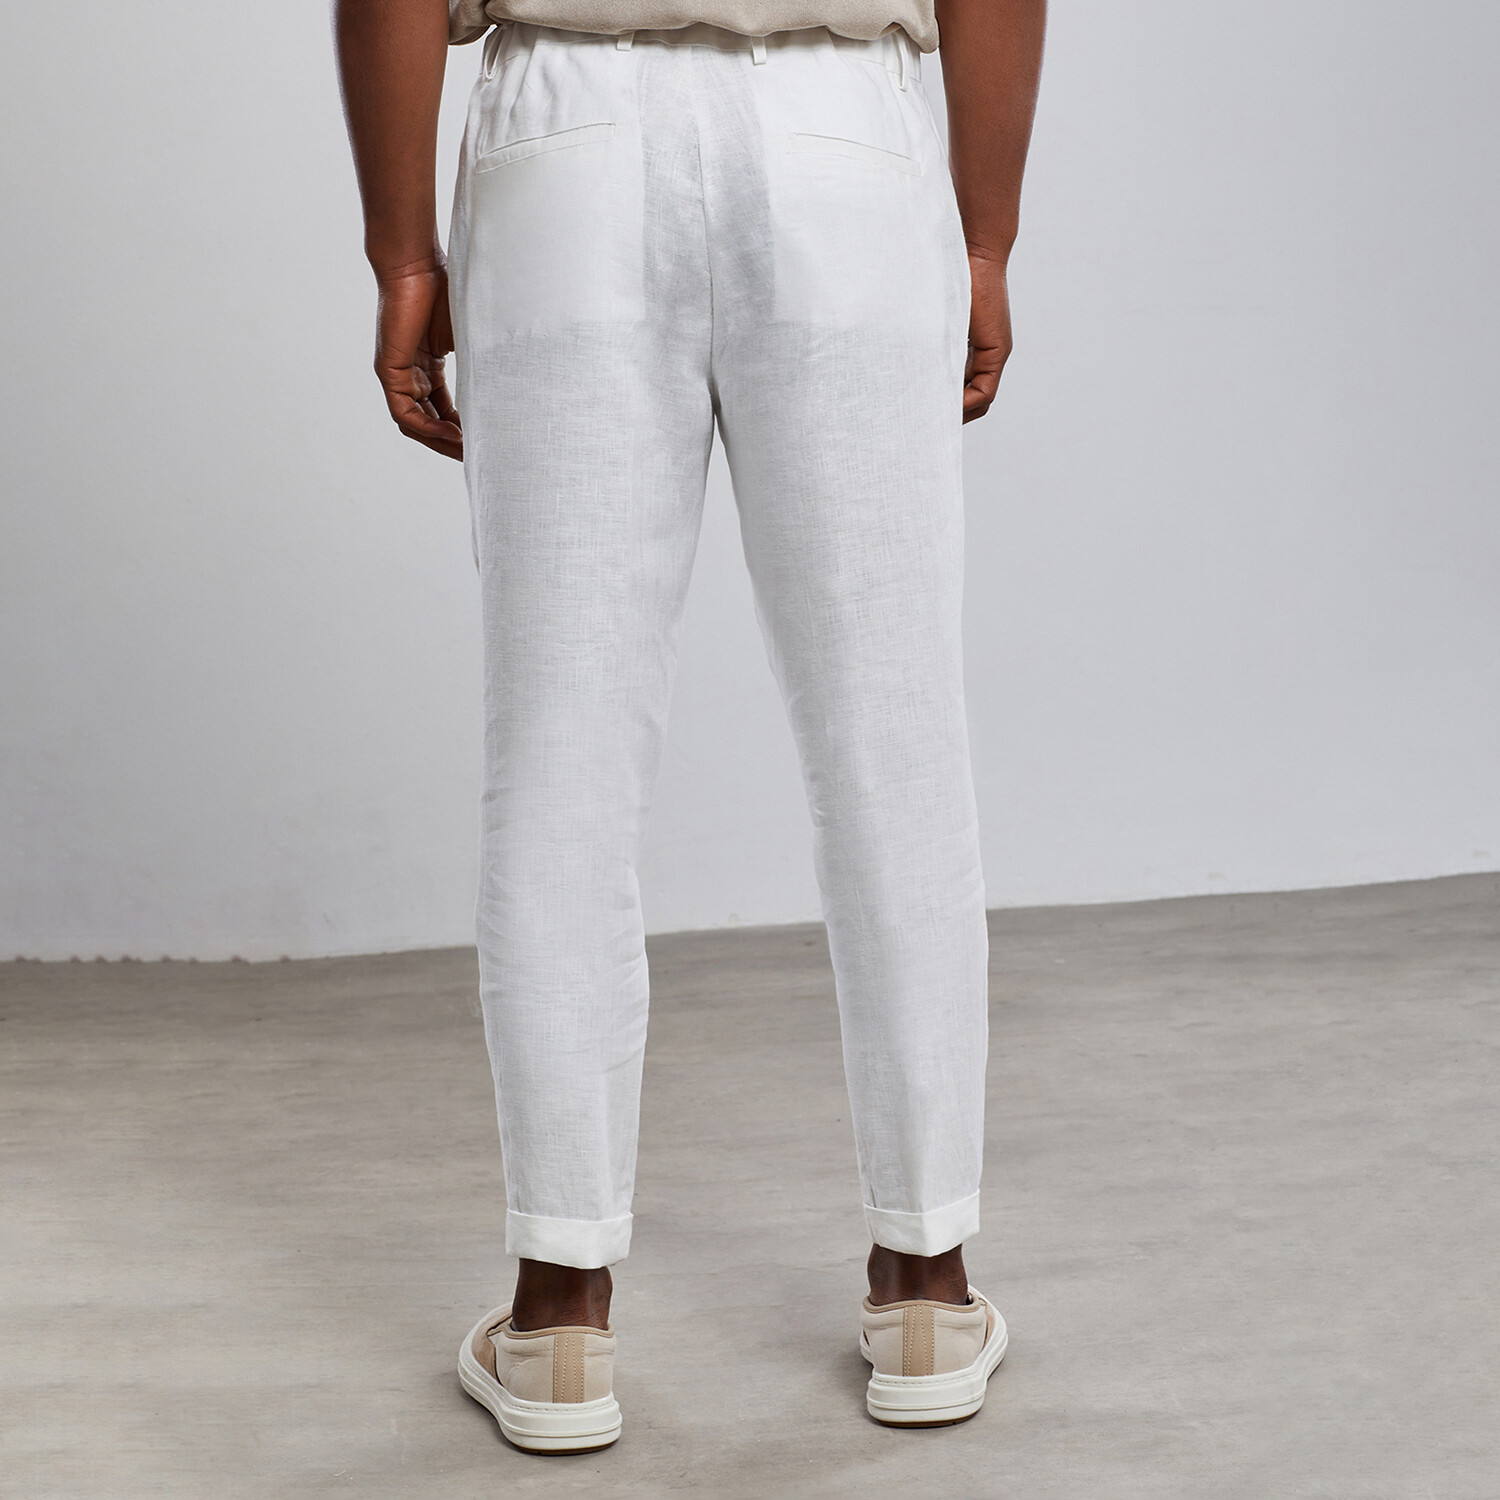 Deluxe Carrot Fit Chino Linen Pants // White (XL) - Dear Deer Resort ...